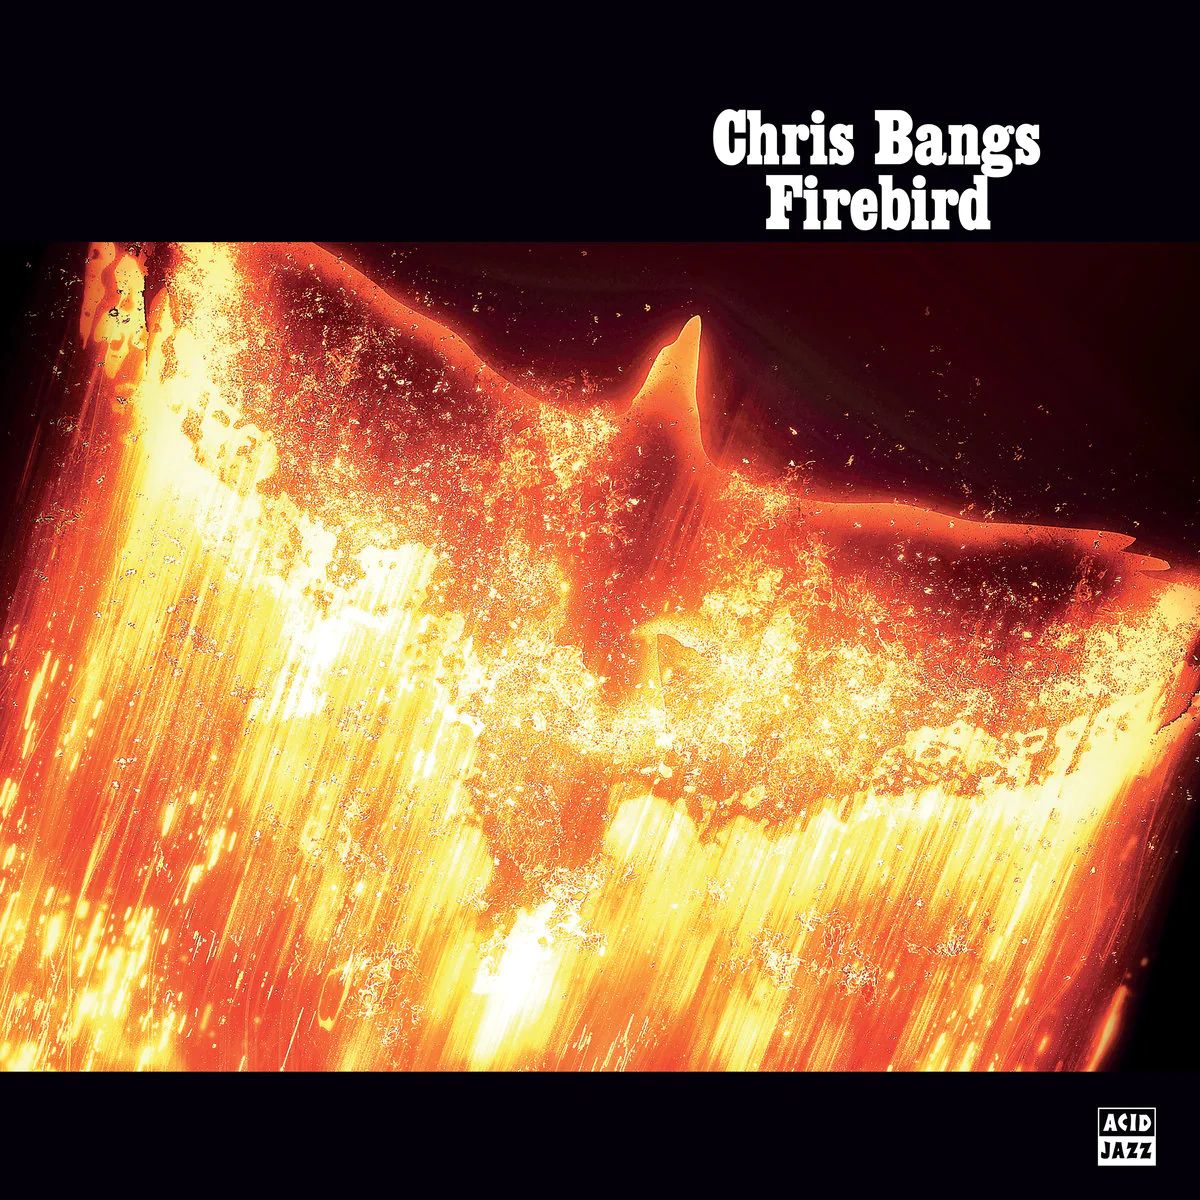 Виниловая пластинка Bangs, Chris, Firebird (0676499066157) виниловая пластинка chris cornell euphoria mourning lp